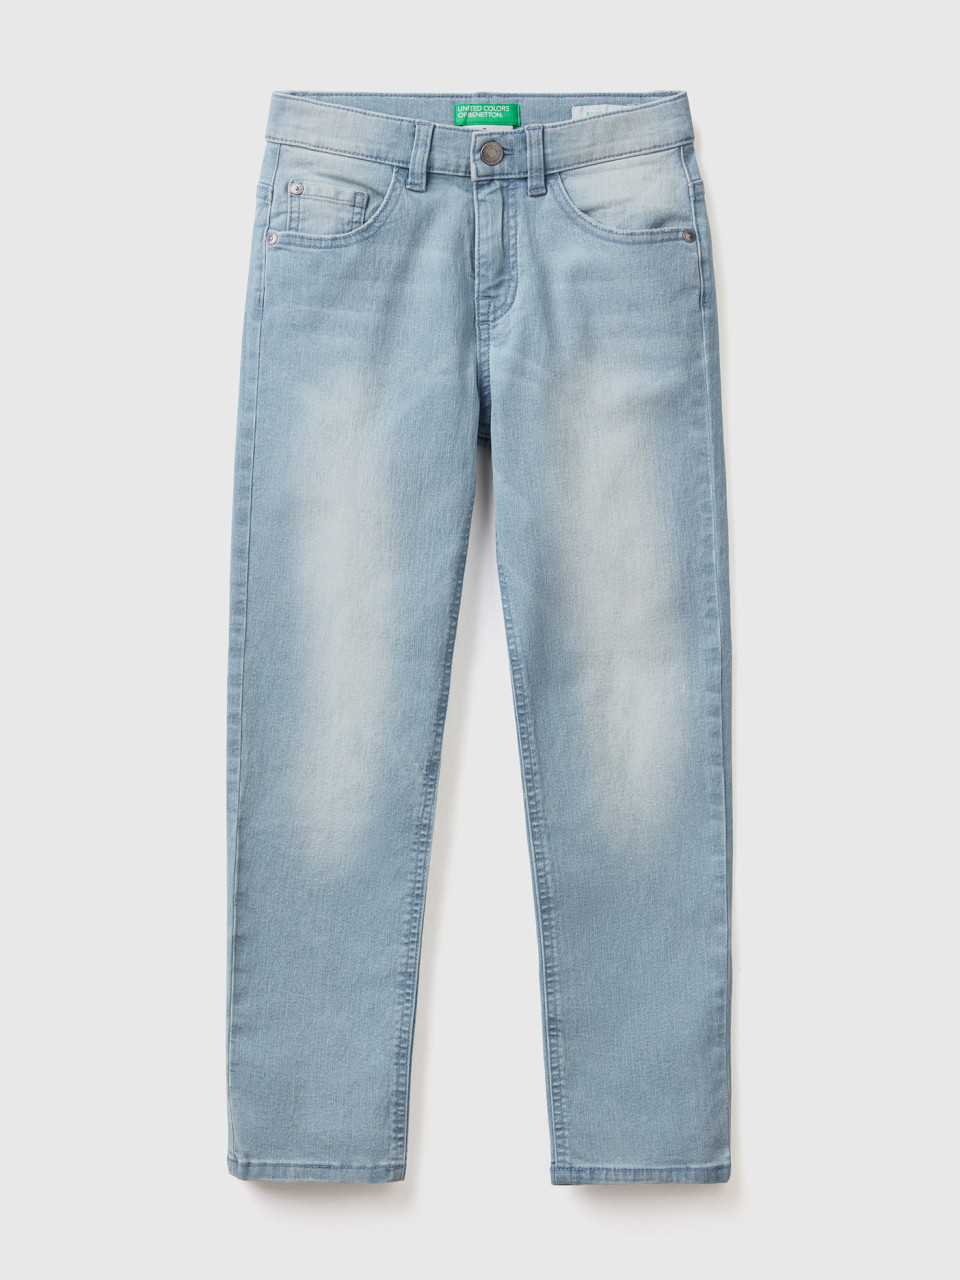 Benetton, Slim-fit-jeans eco-recycle, Azurblau, male